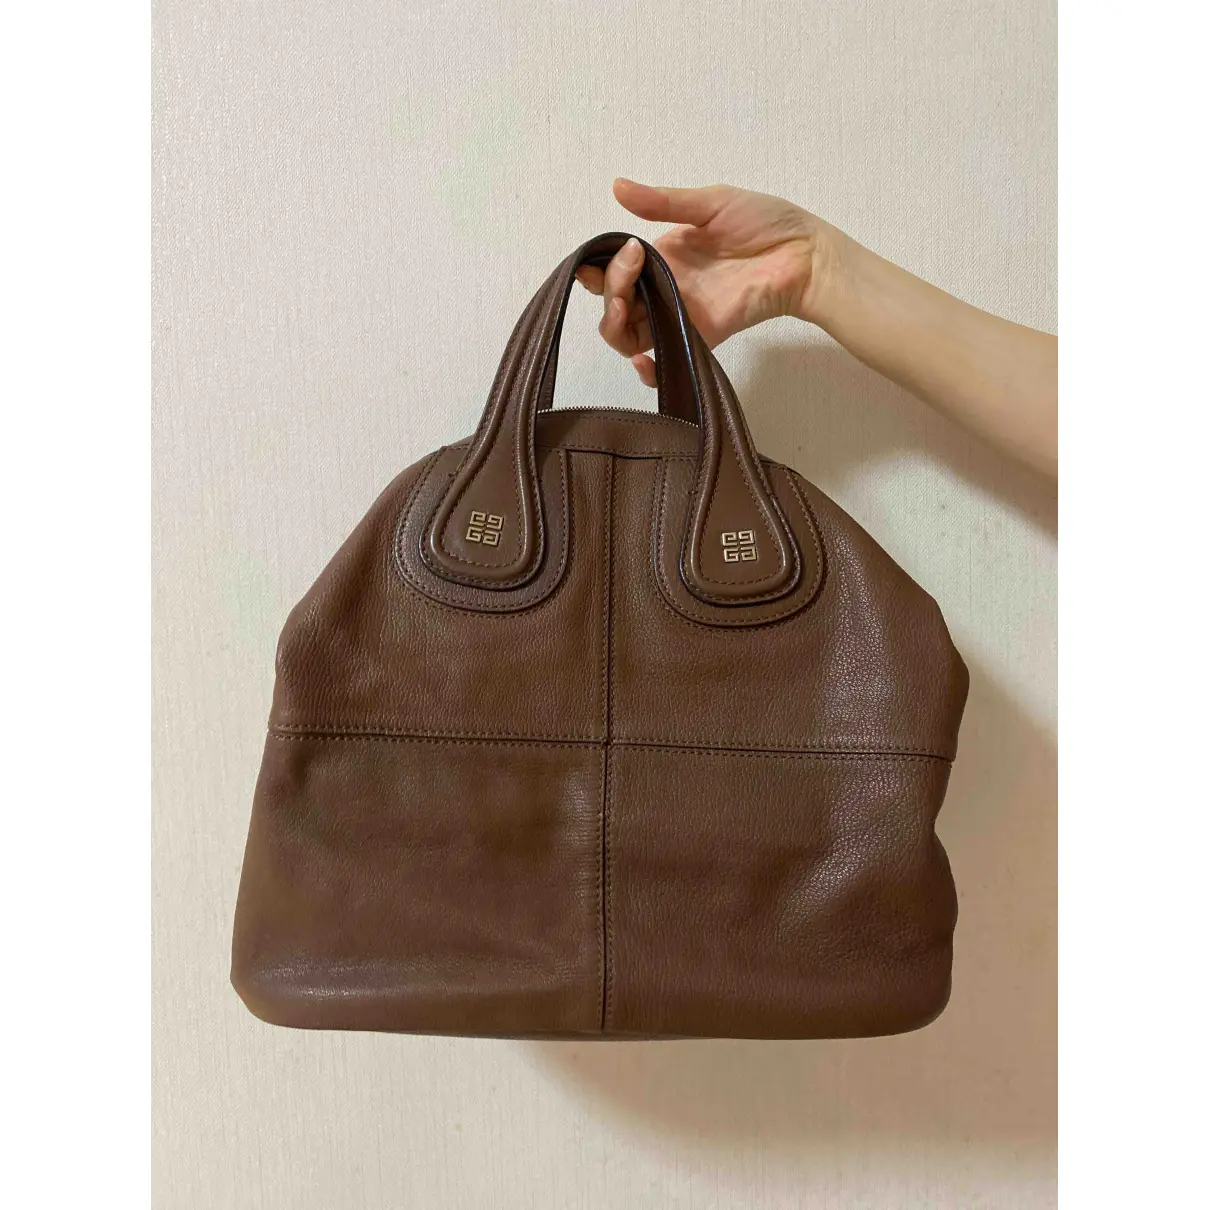 Buy Givenchy Nightingale leather handbag online